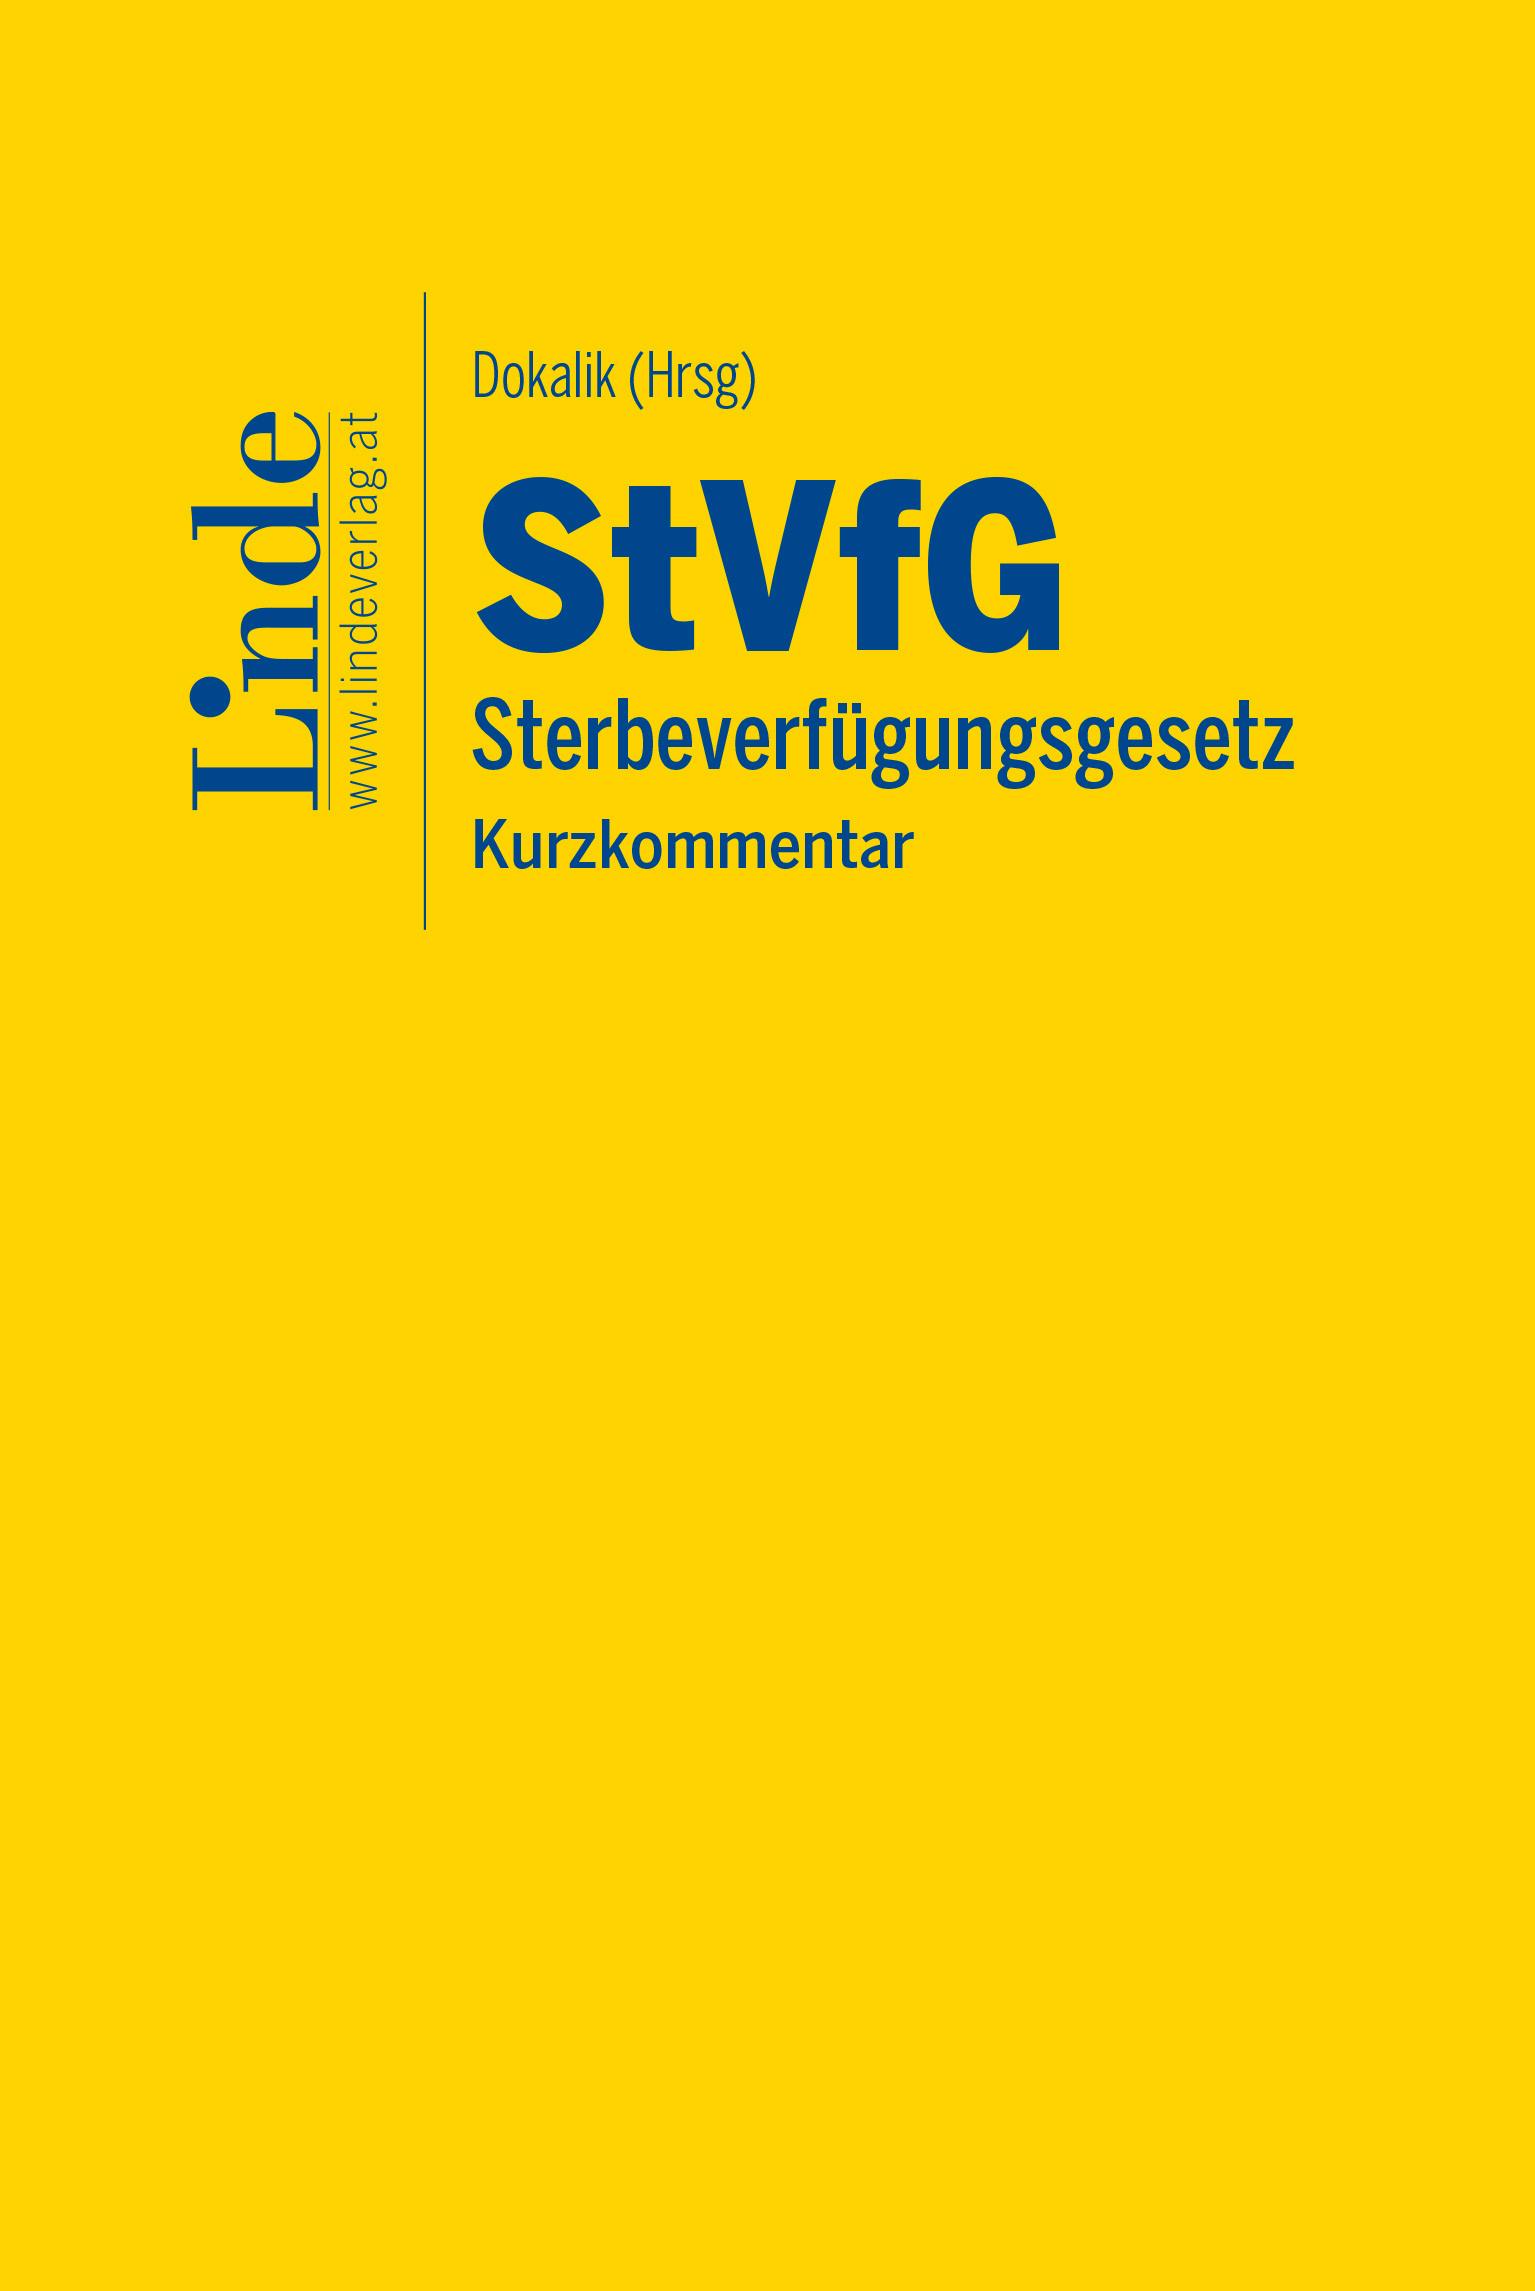 Dokalik (Hrsg.)
StVfG | Sterbeverfügungsgesetz
Kurzkommentar